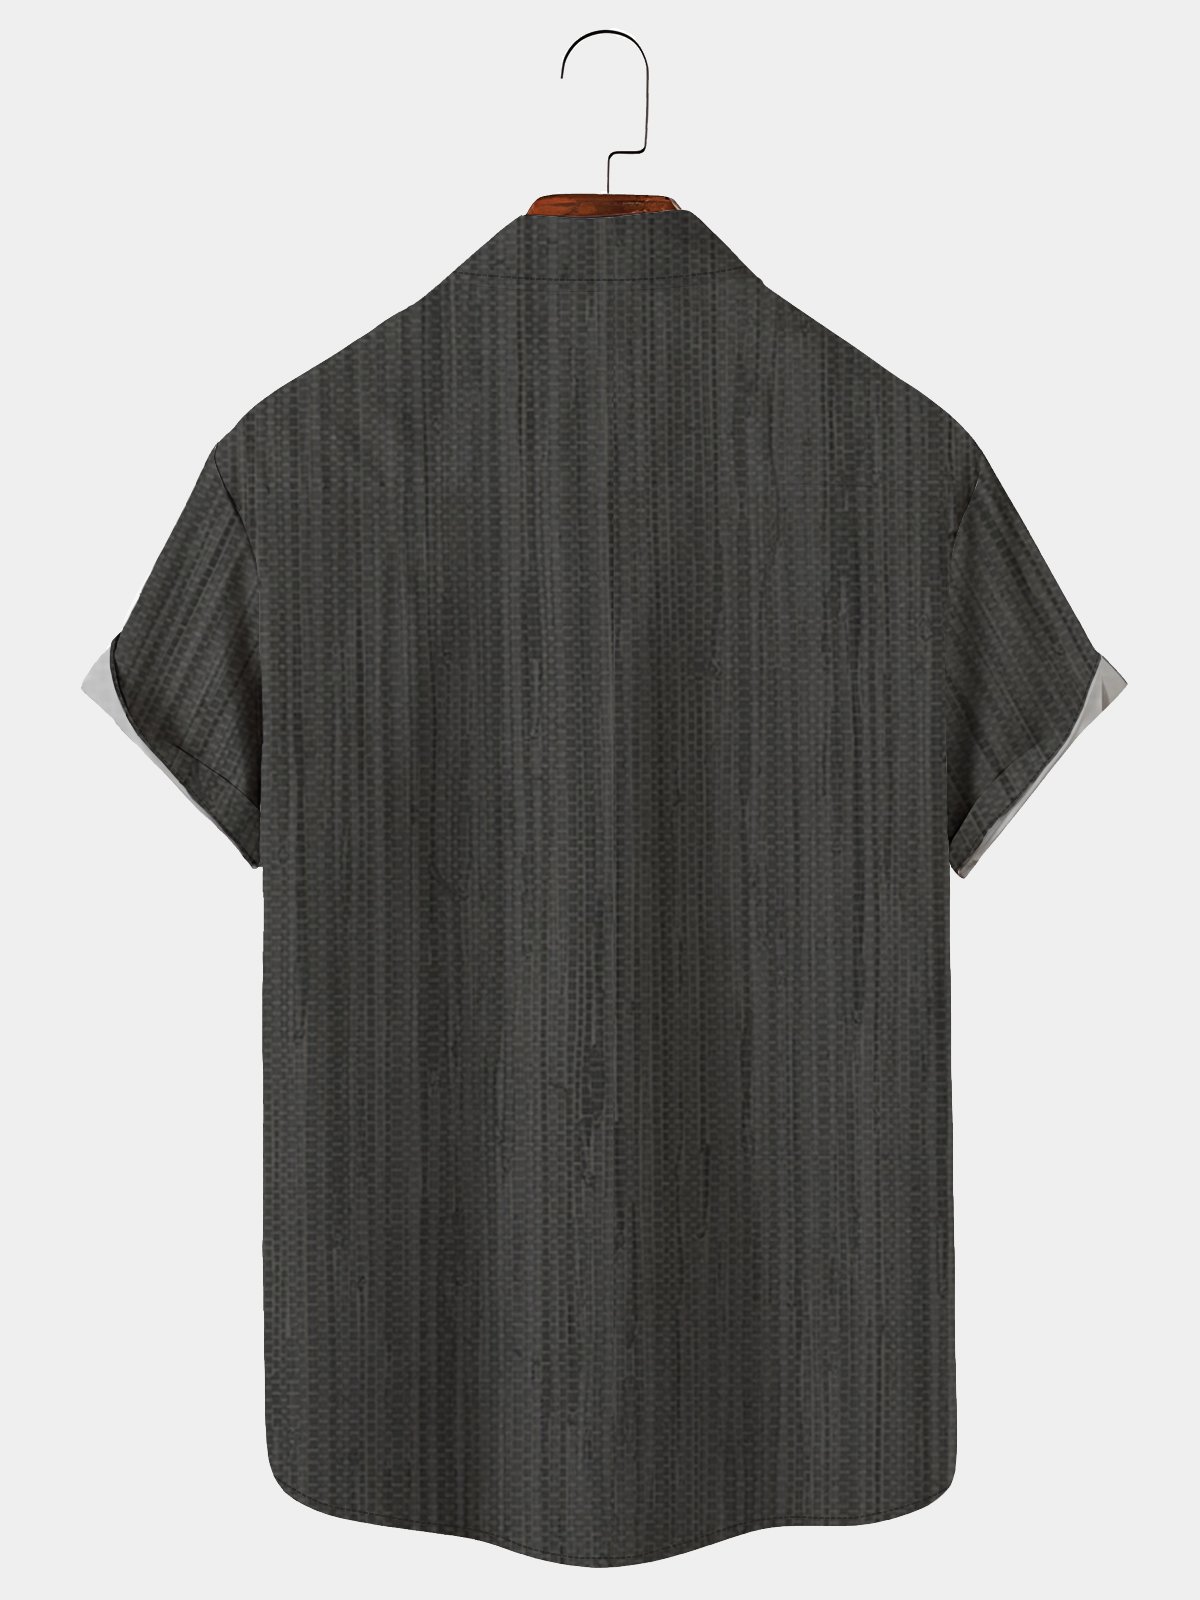 Royaura Gray Vintage Bowling Stripe Textured Printed Chest Pocket Vintage Shirt Plus Size Printed Shirt